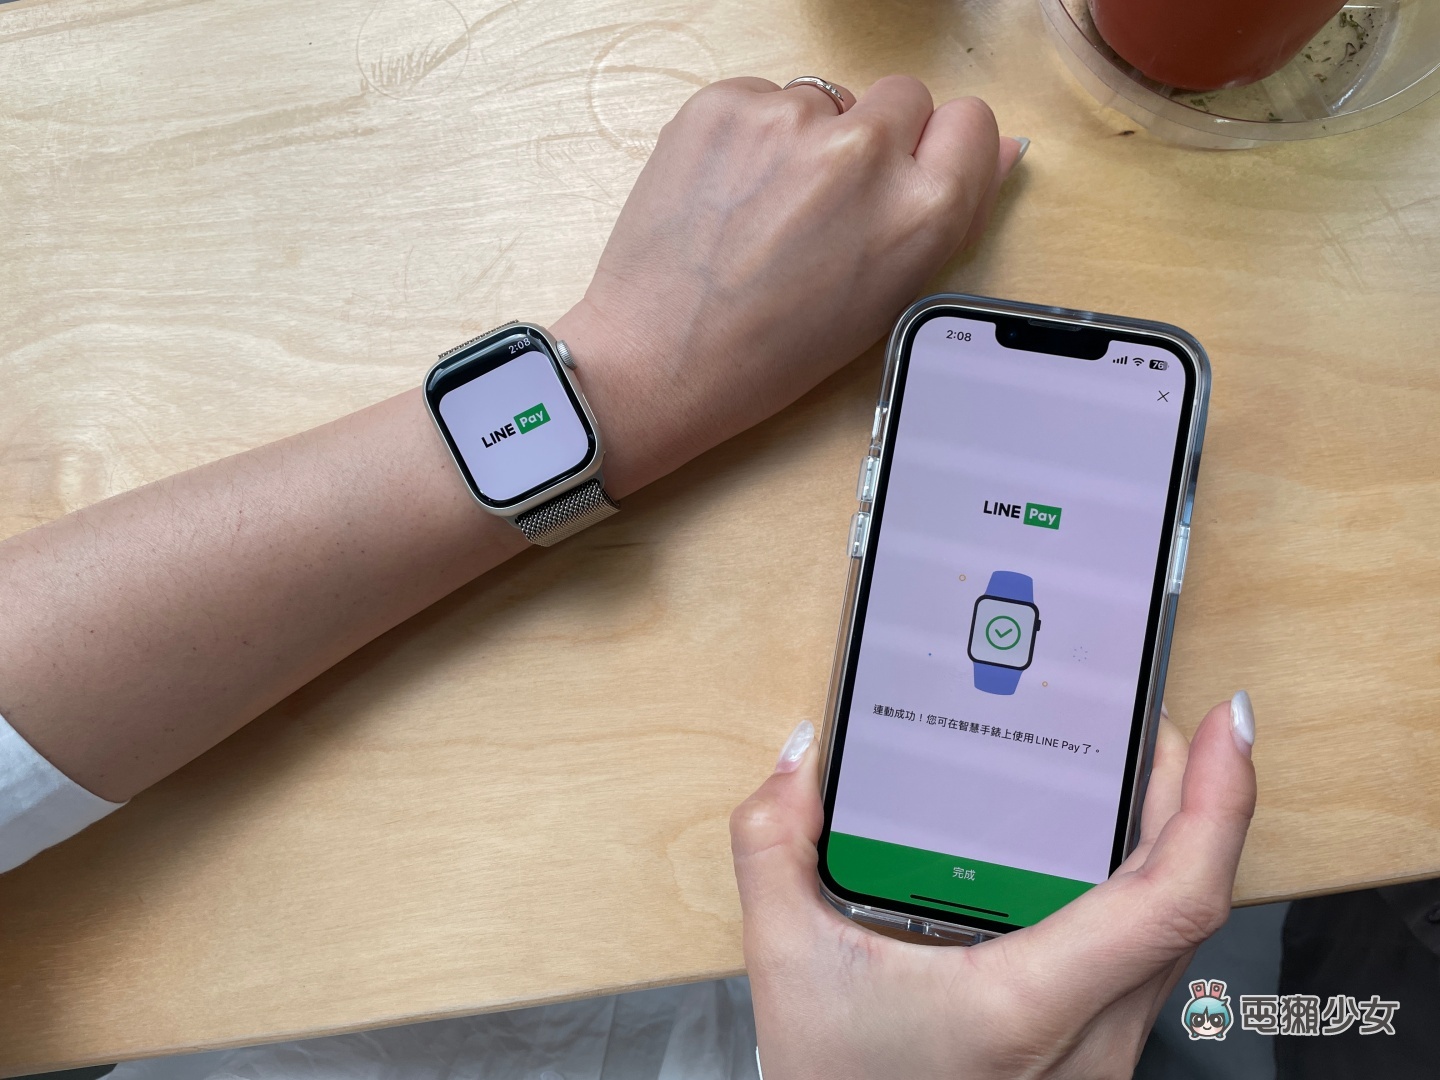 Apple Watch 實用小技巧！一鍵開啟 LINE Pay 條碼付款超方便